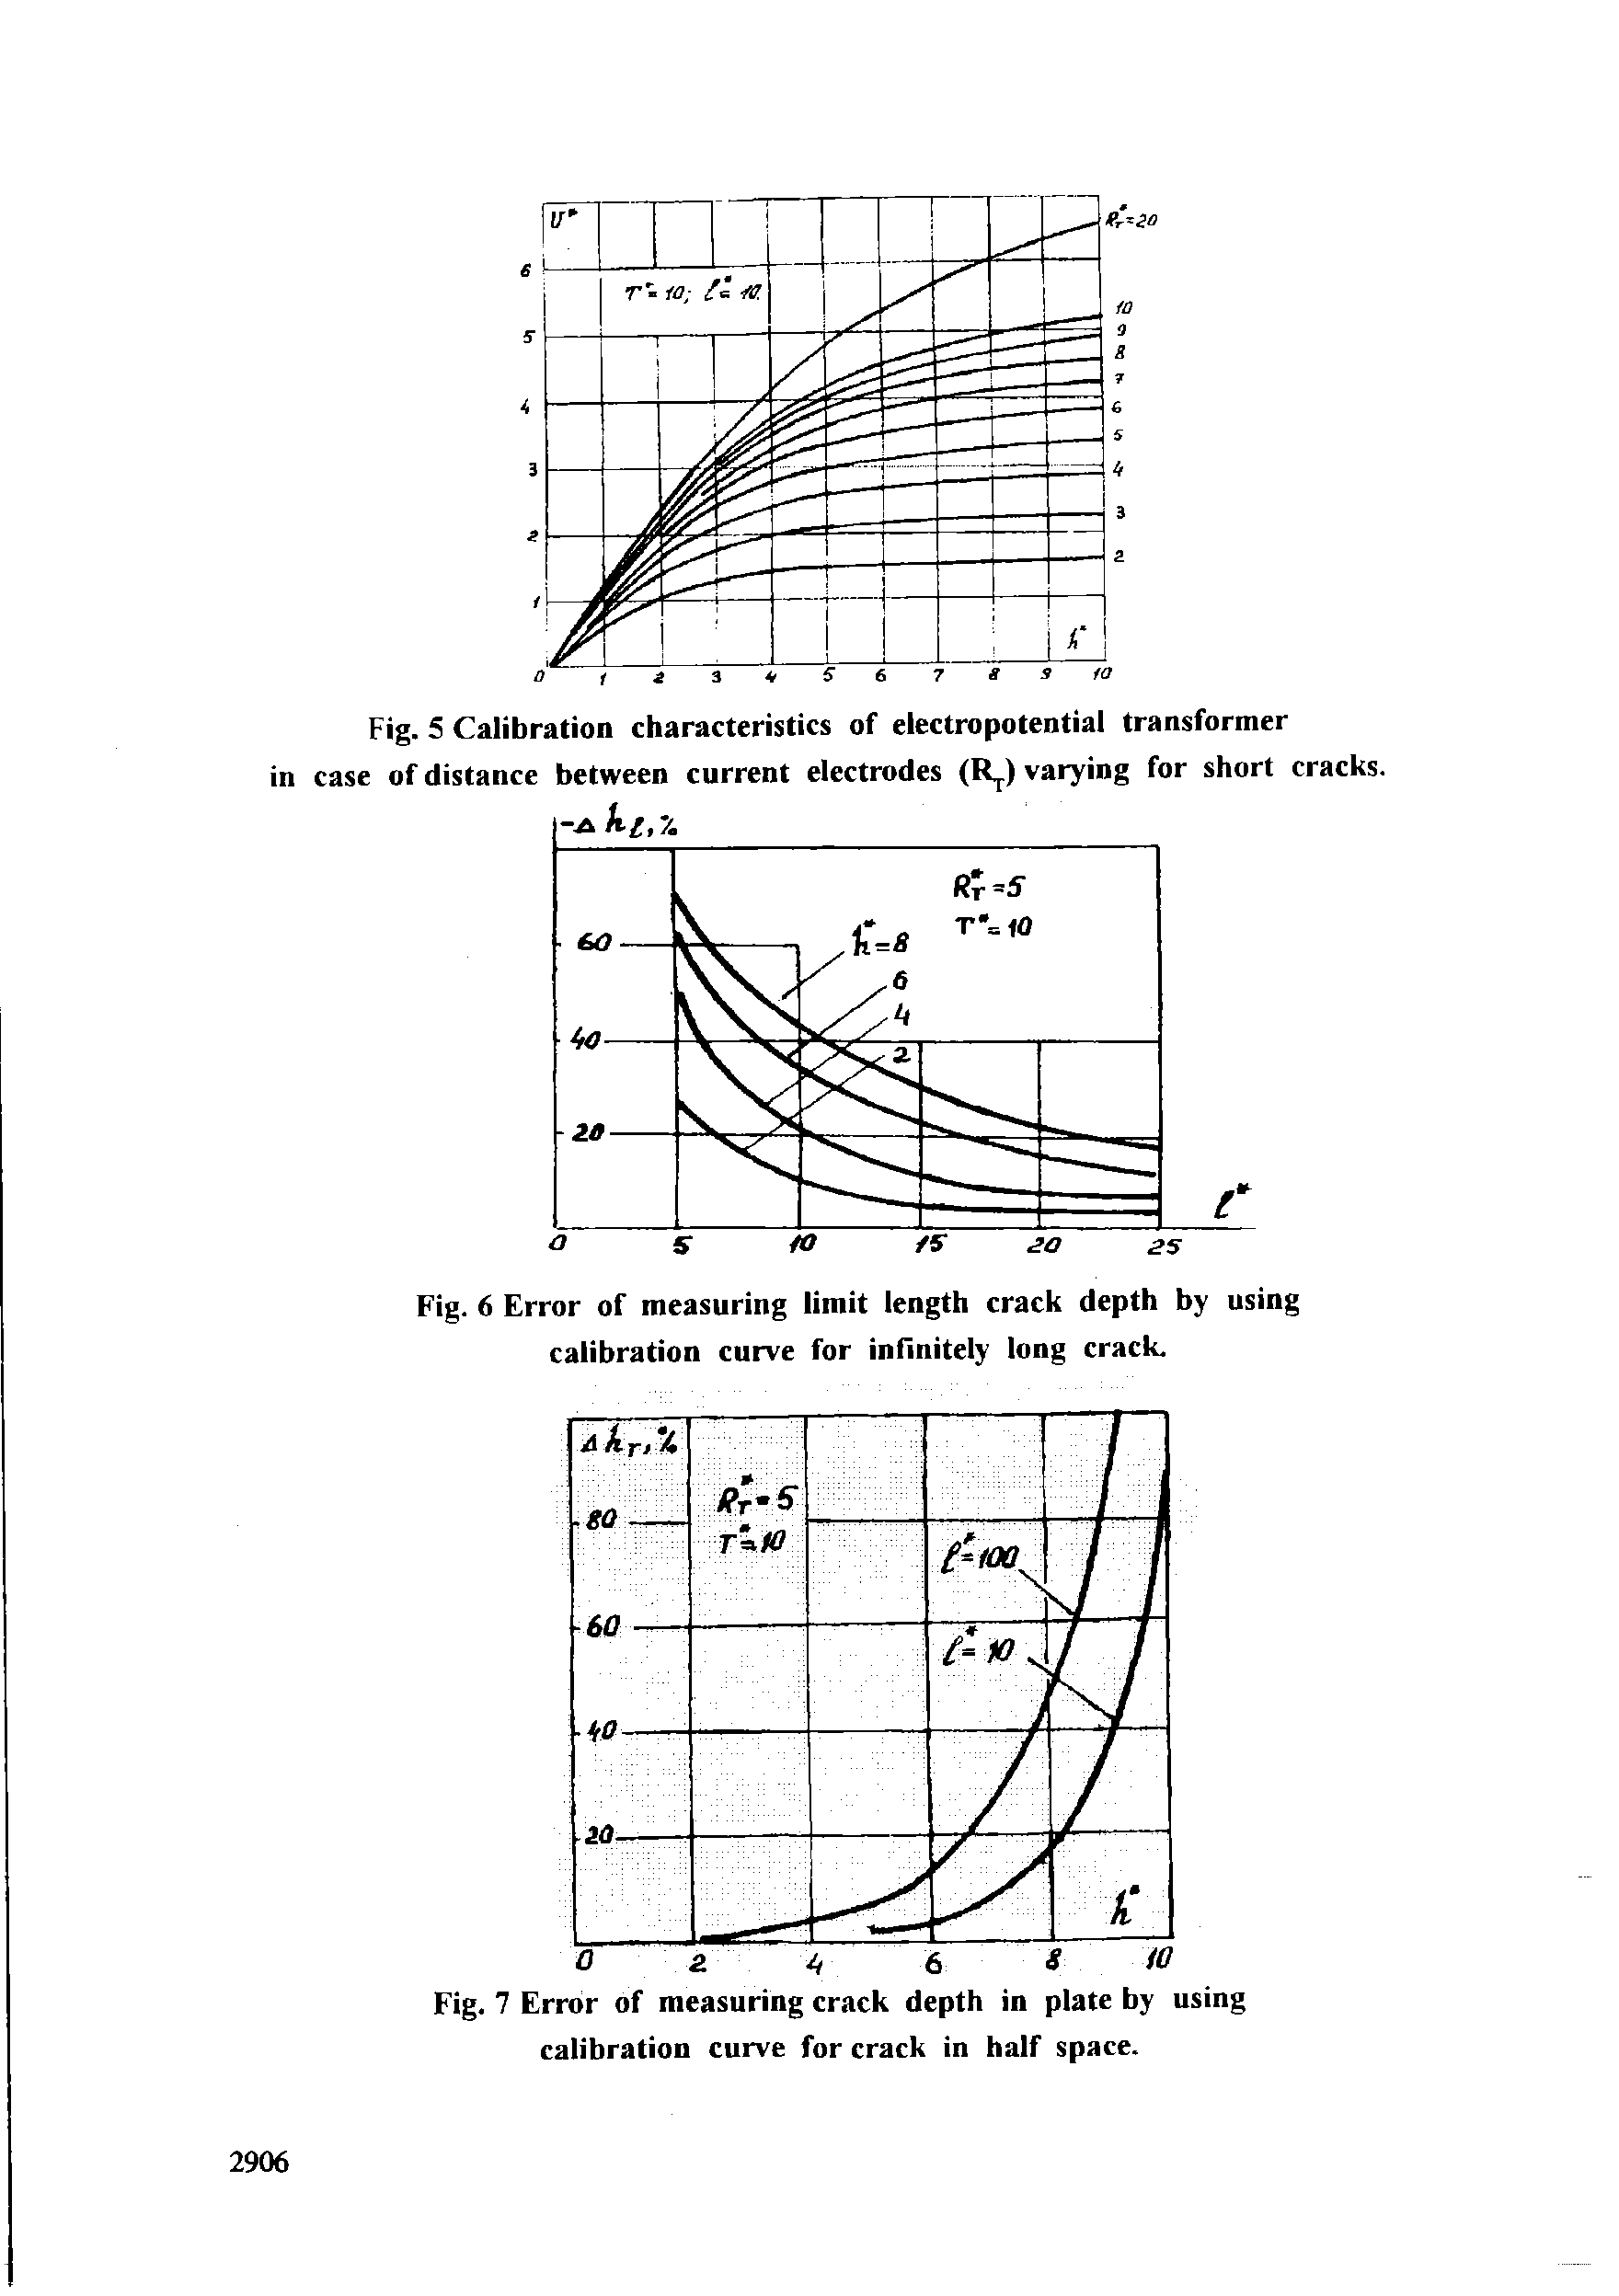 Fig. 6 Error of measuring limit length crack depth by using calibration curve for infinitely long crack.